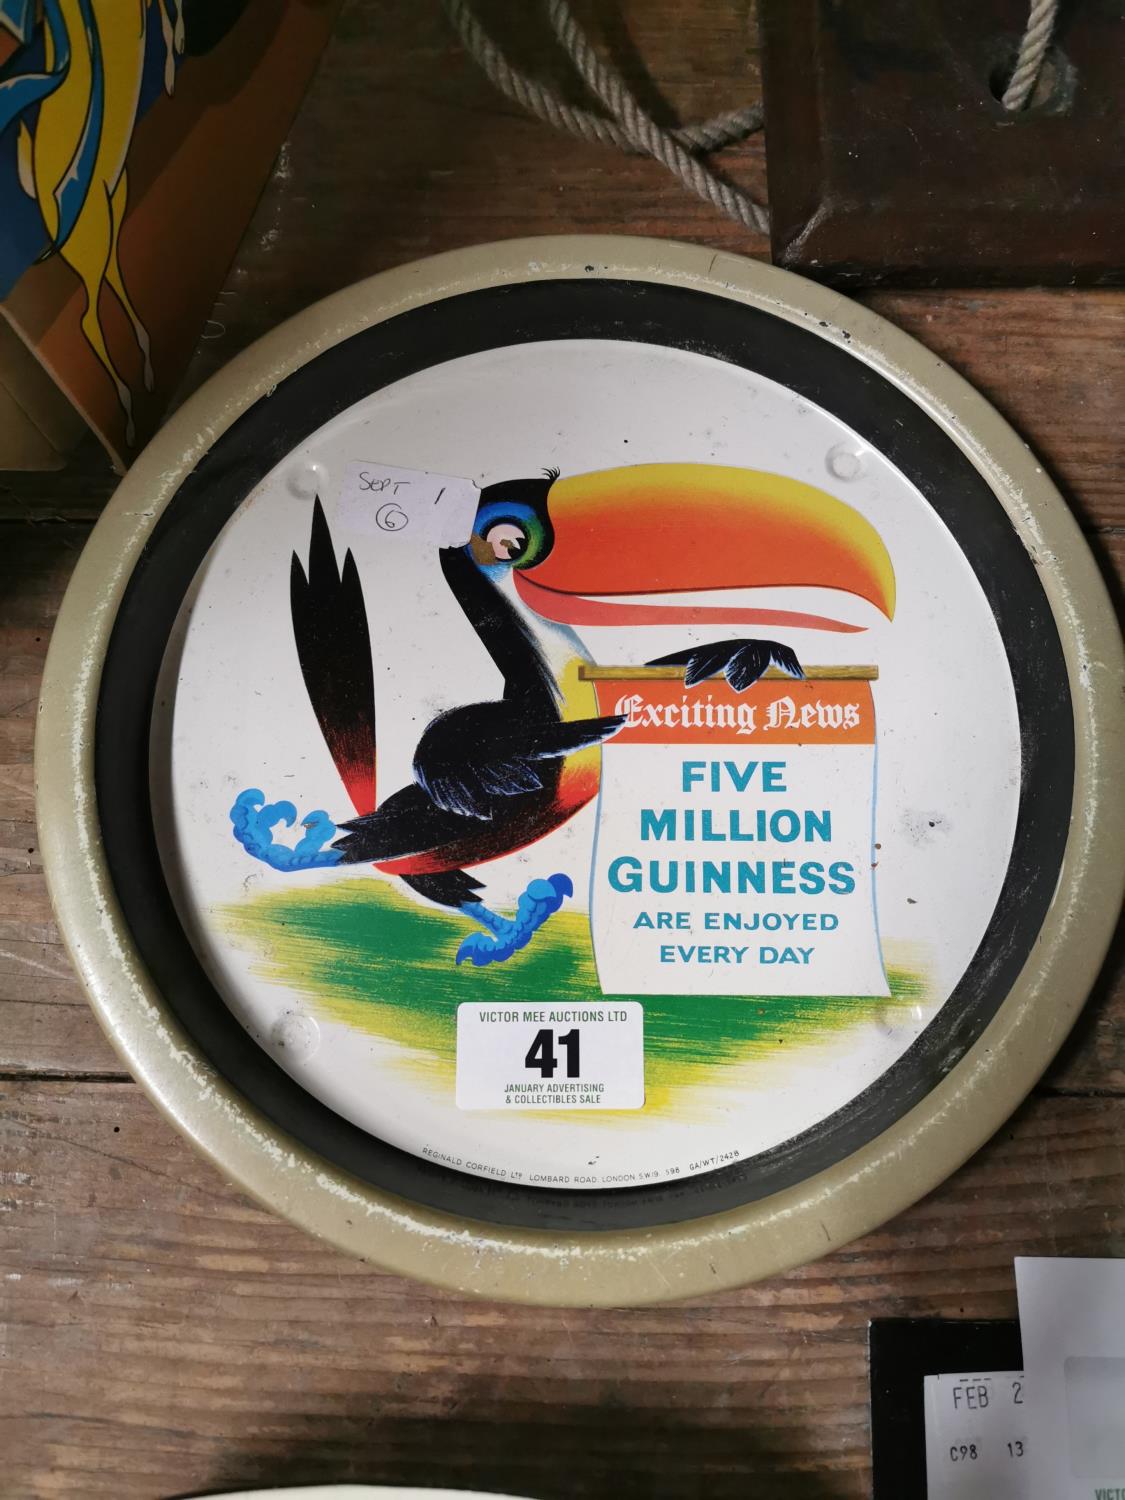 Guinness advertising tinplate tray.